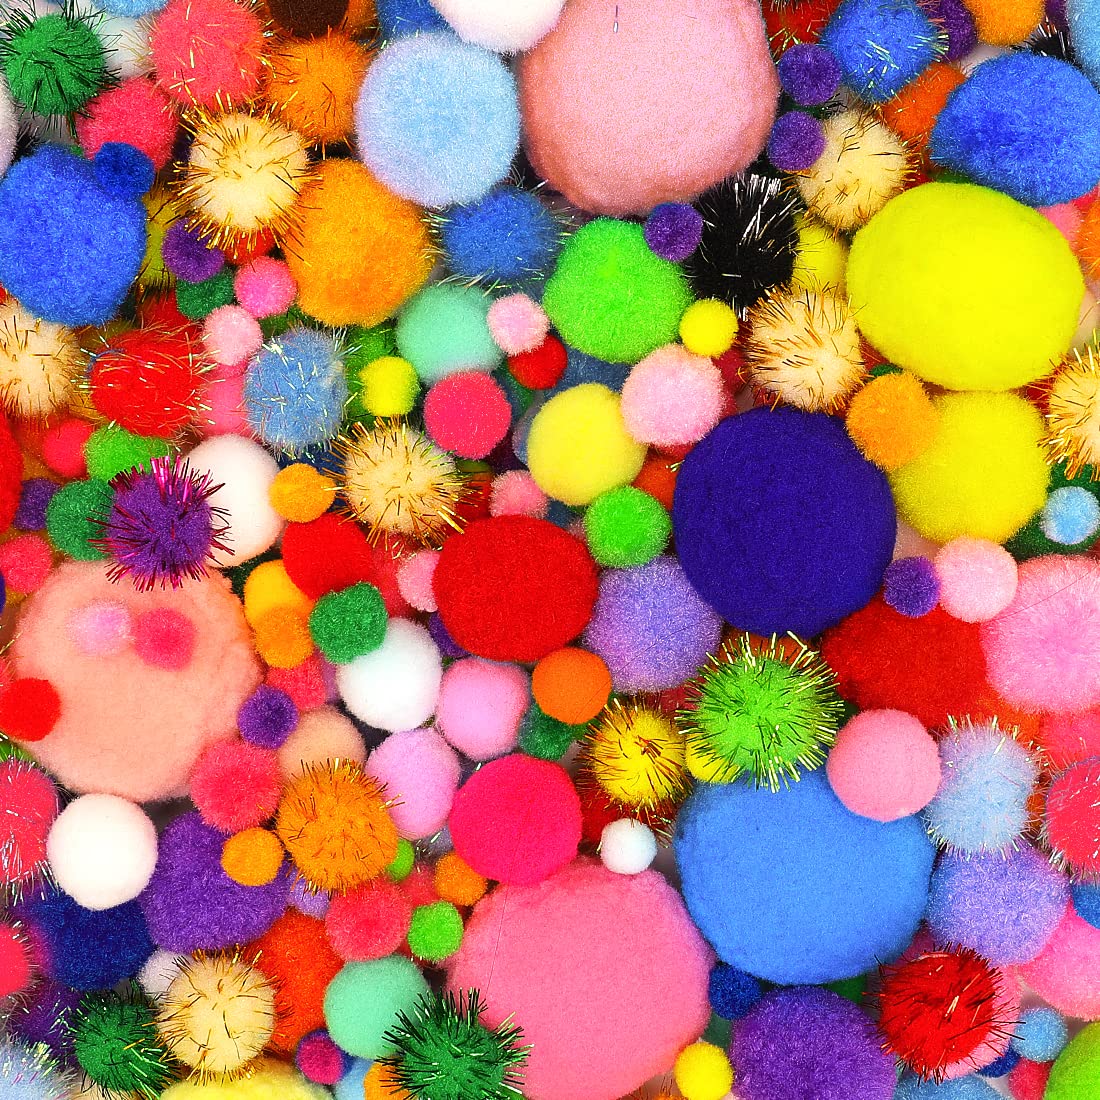 Iooleem Multi-Colored Regular & Sparkly Glitter Pom Poms 800pcs